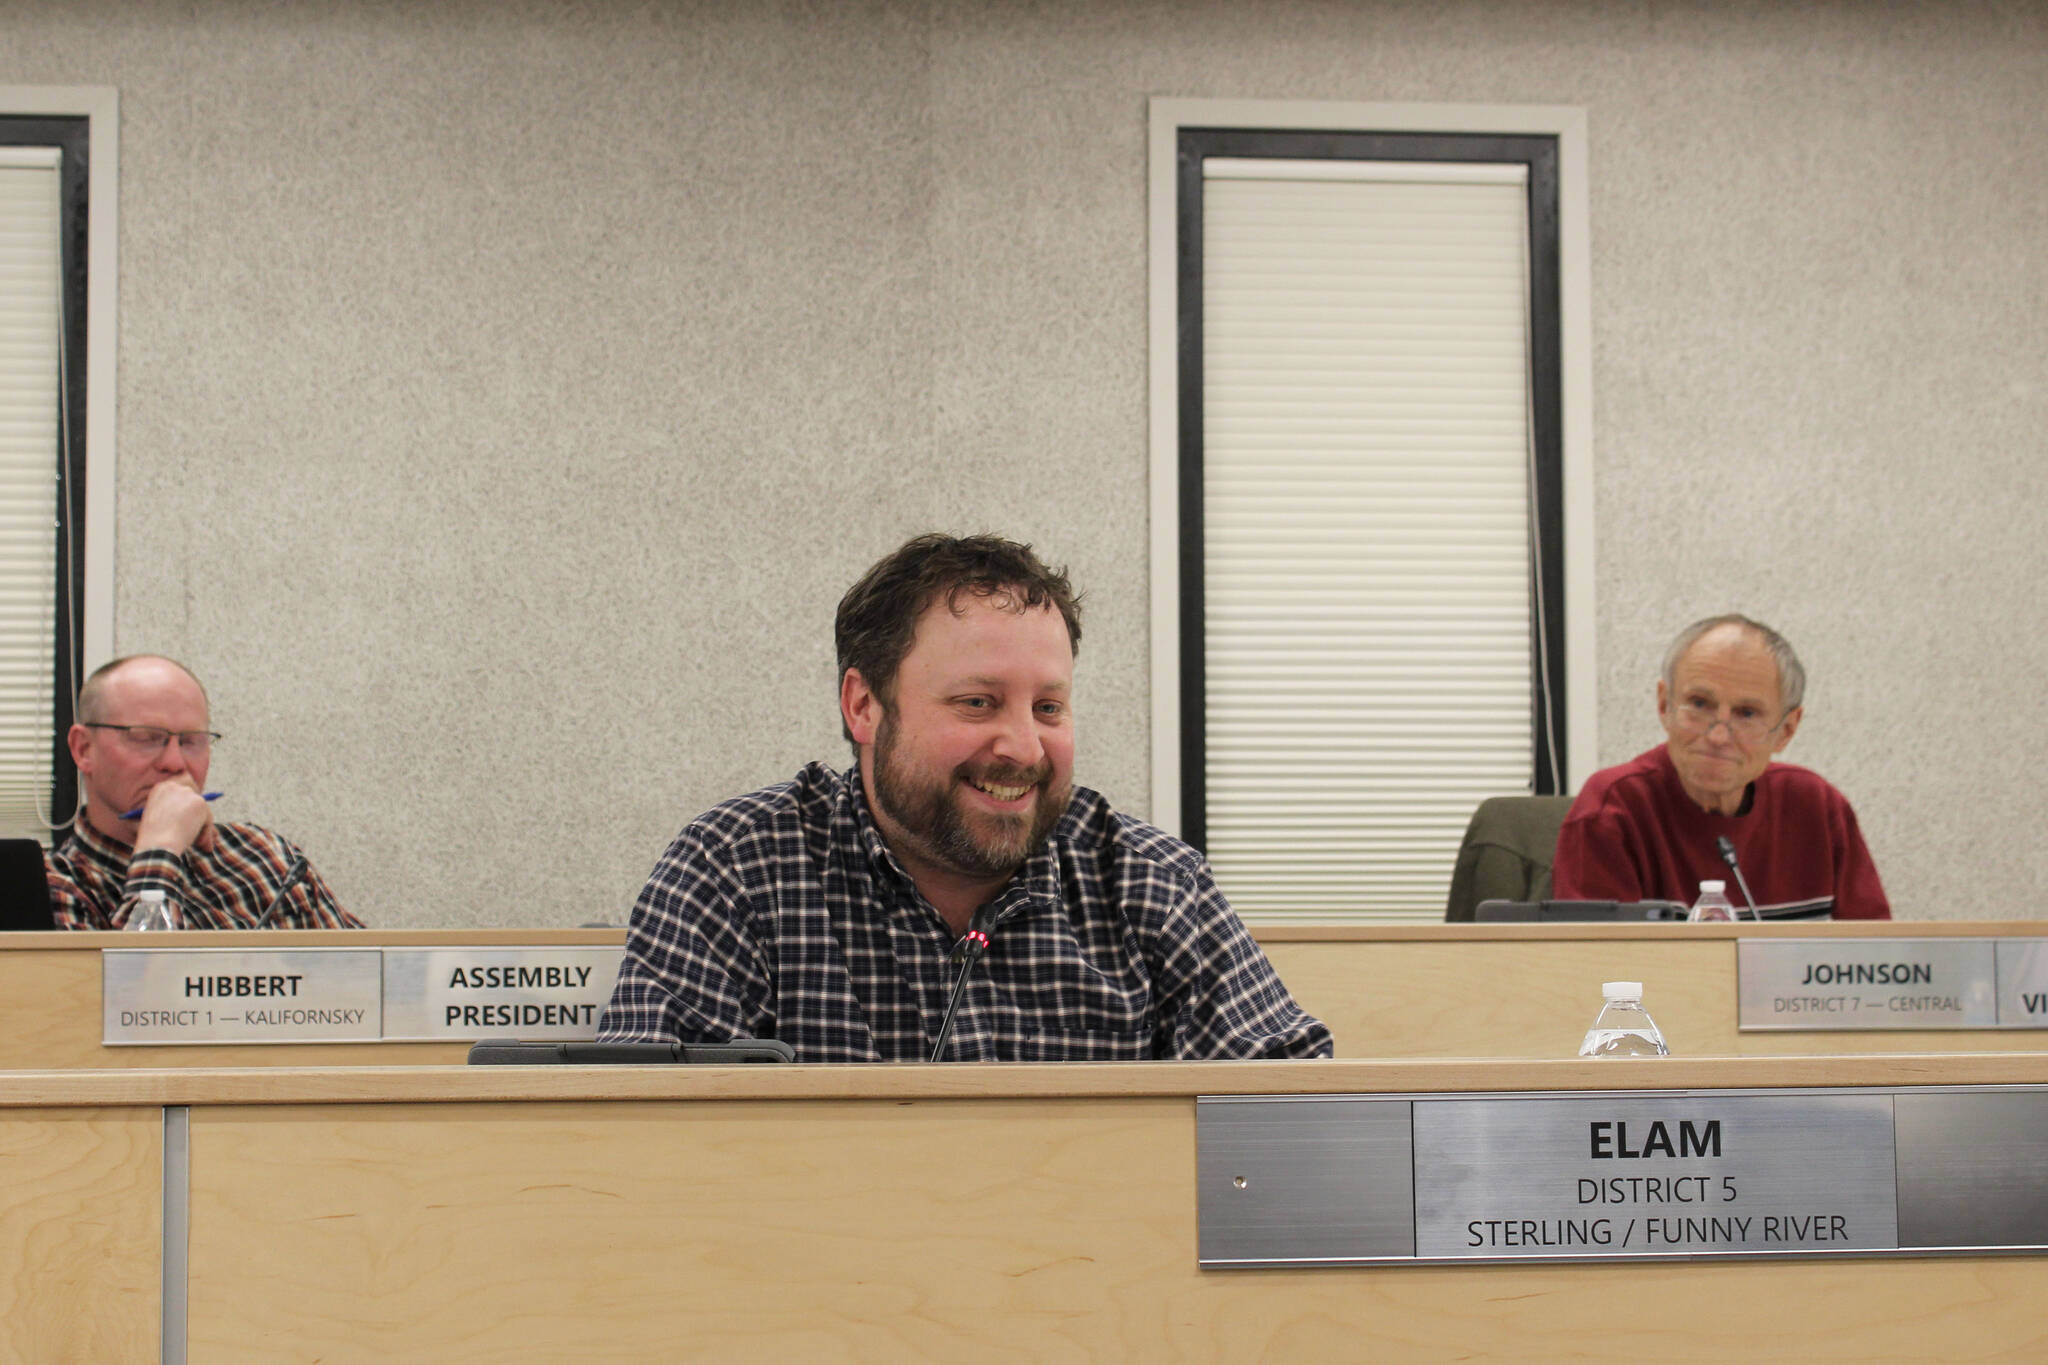 Bill Elam (center) nominates Brent Hibbert to be president of the Kenai Peninsula Borough Assembly on Tuesday, Oct. 26, 2021 in Soldotna, Alaska. (Ashlyn O’Hara/Peninsula Clarion)